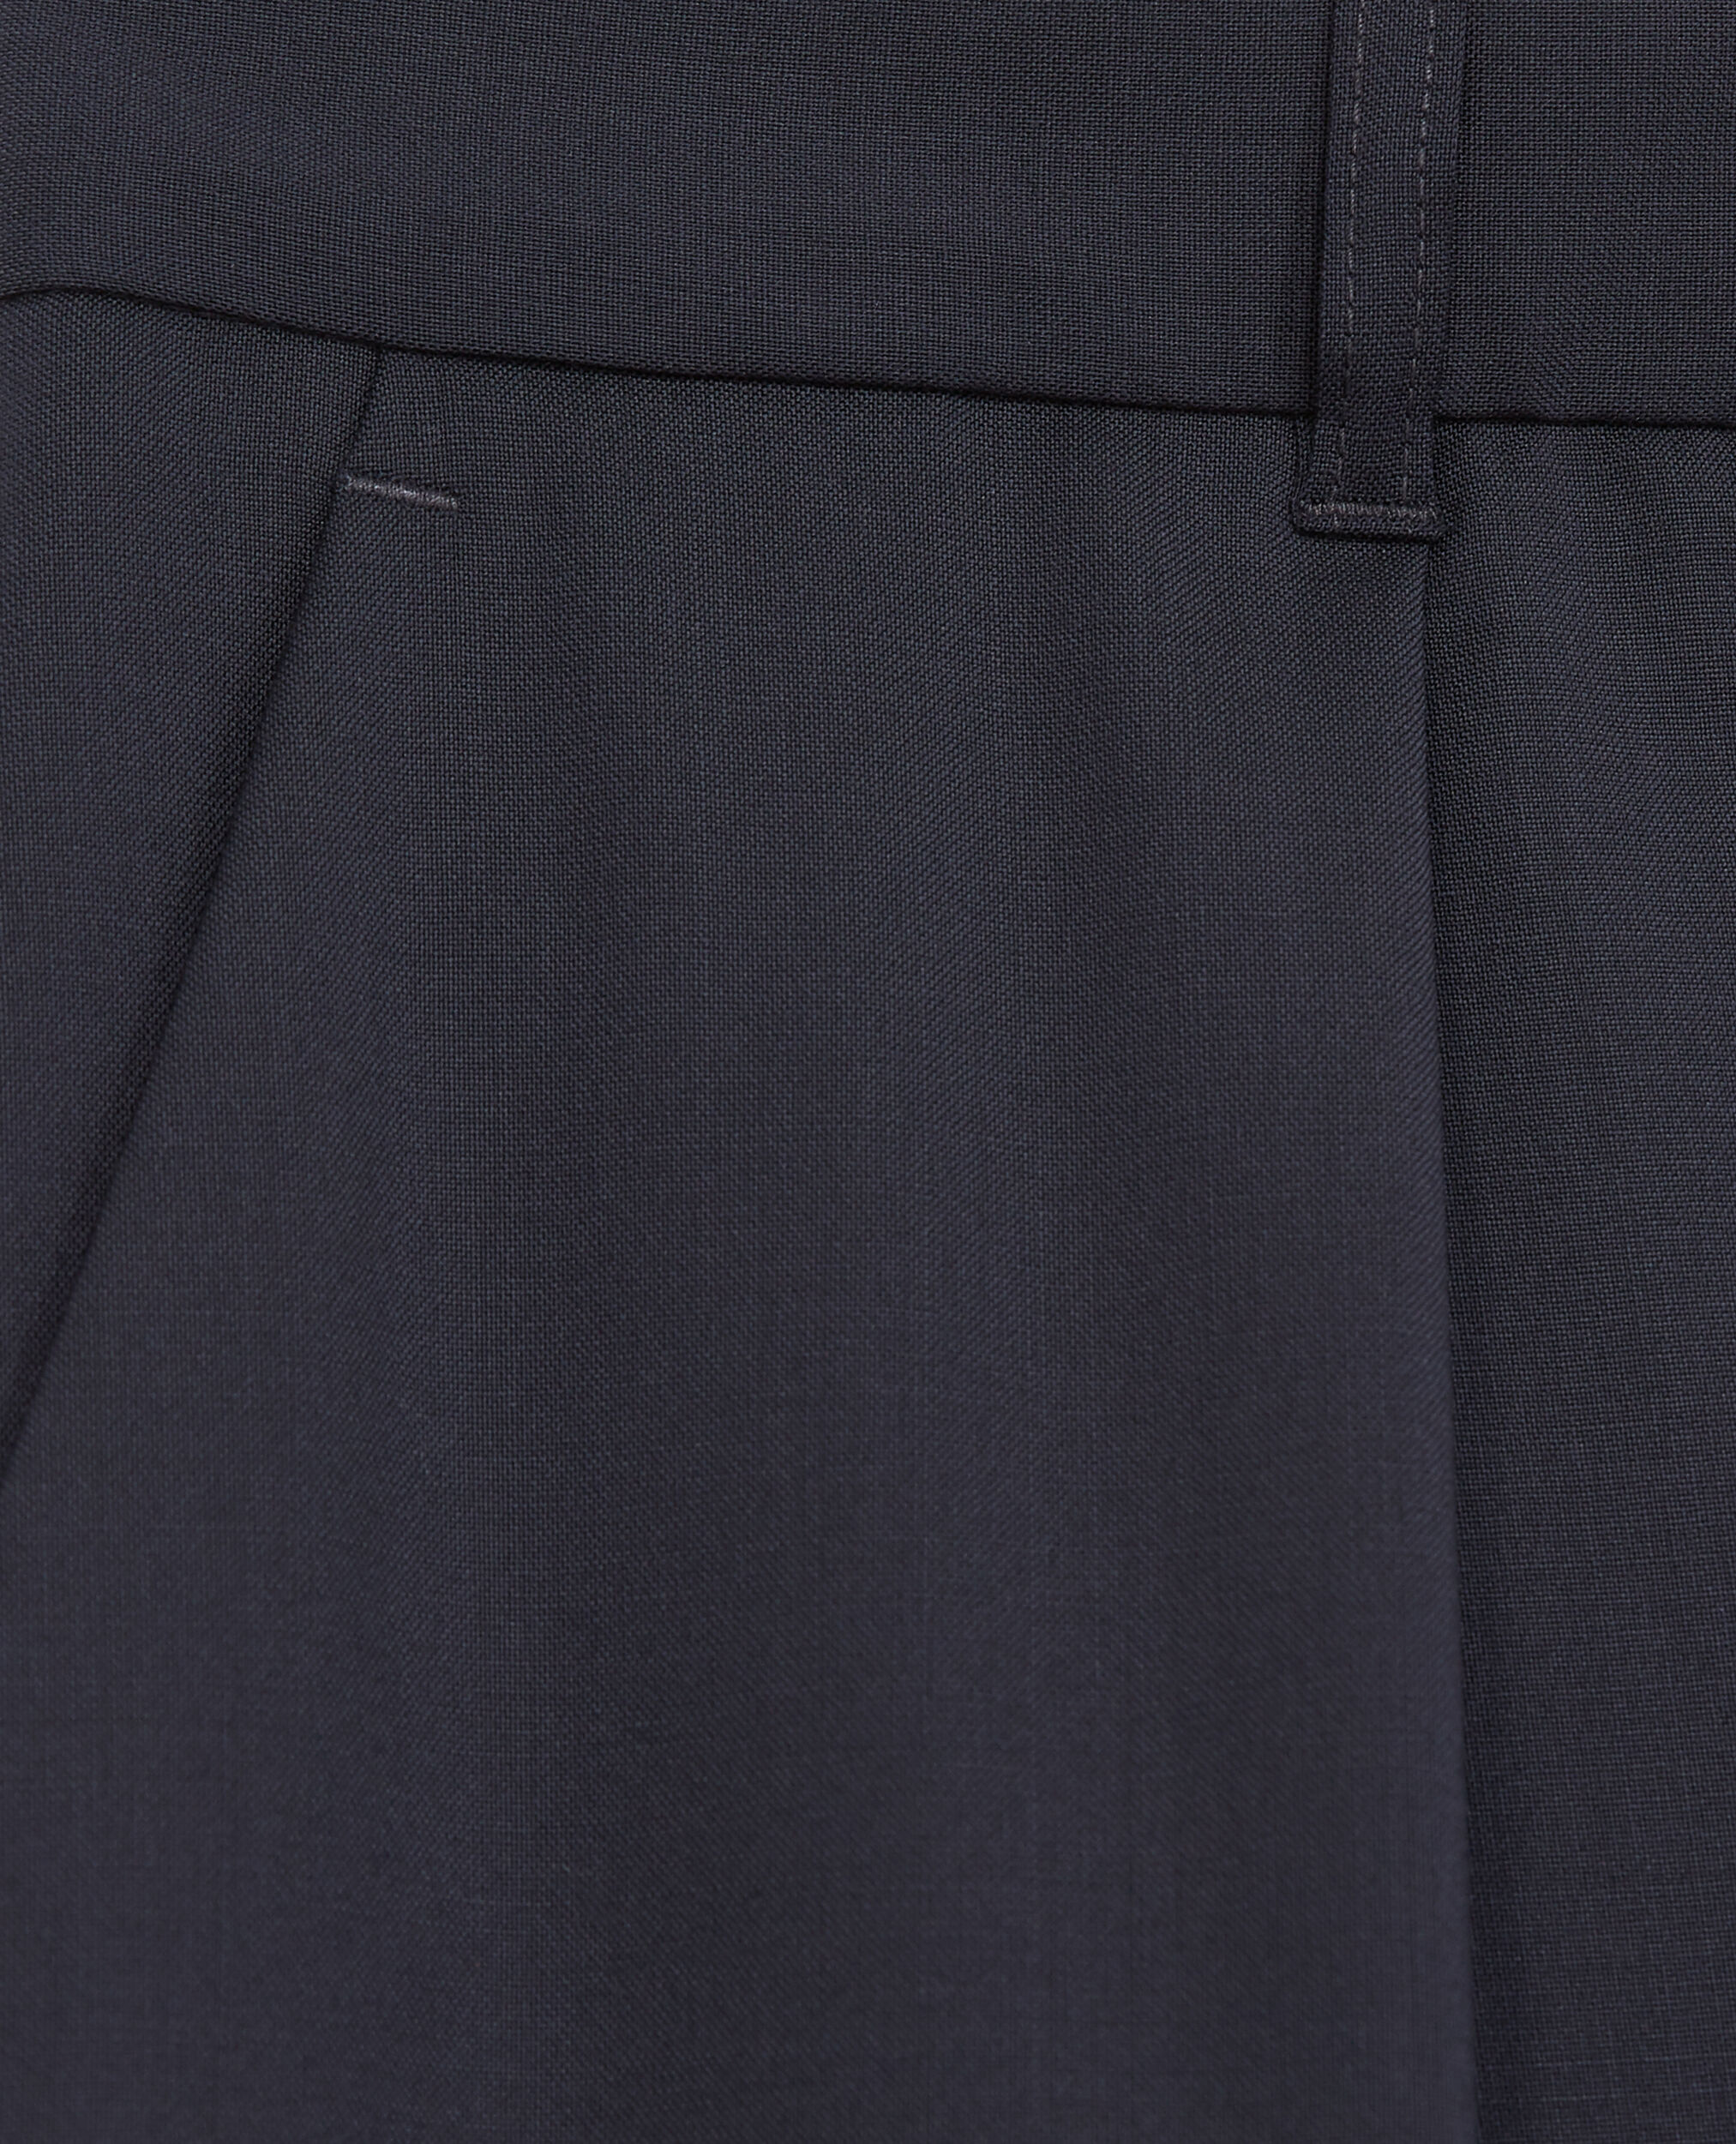 Pantalón traje azul marino lana, NAVY, hi-res image number null